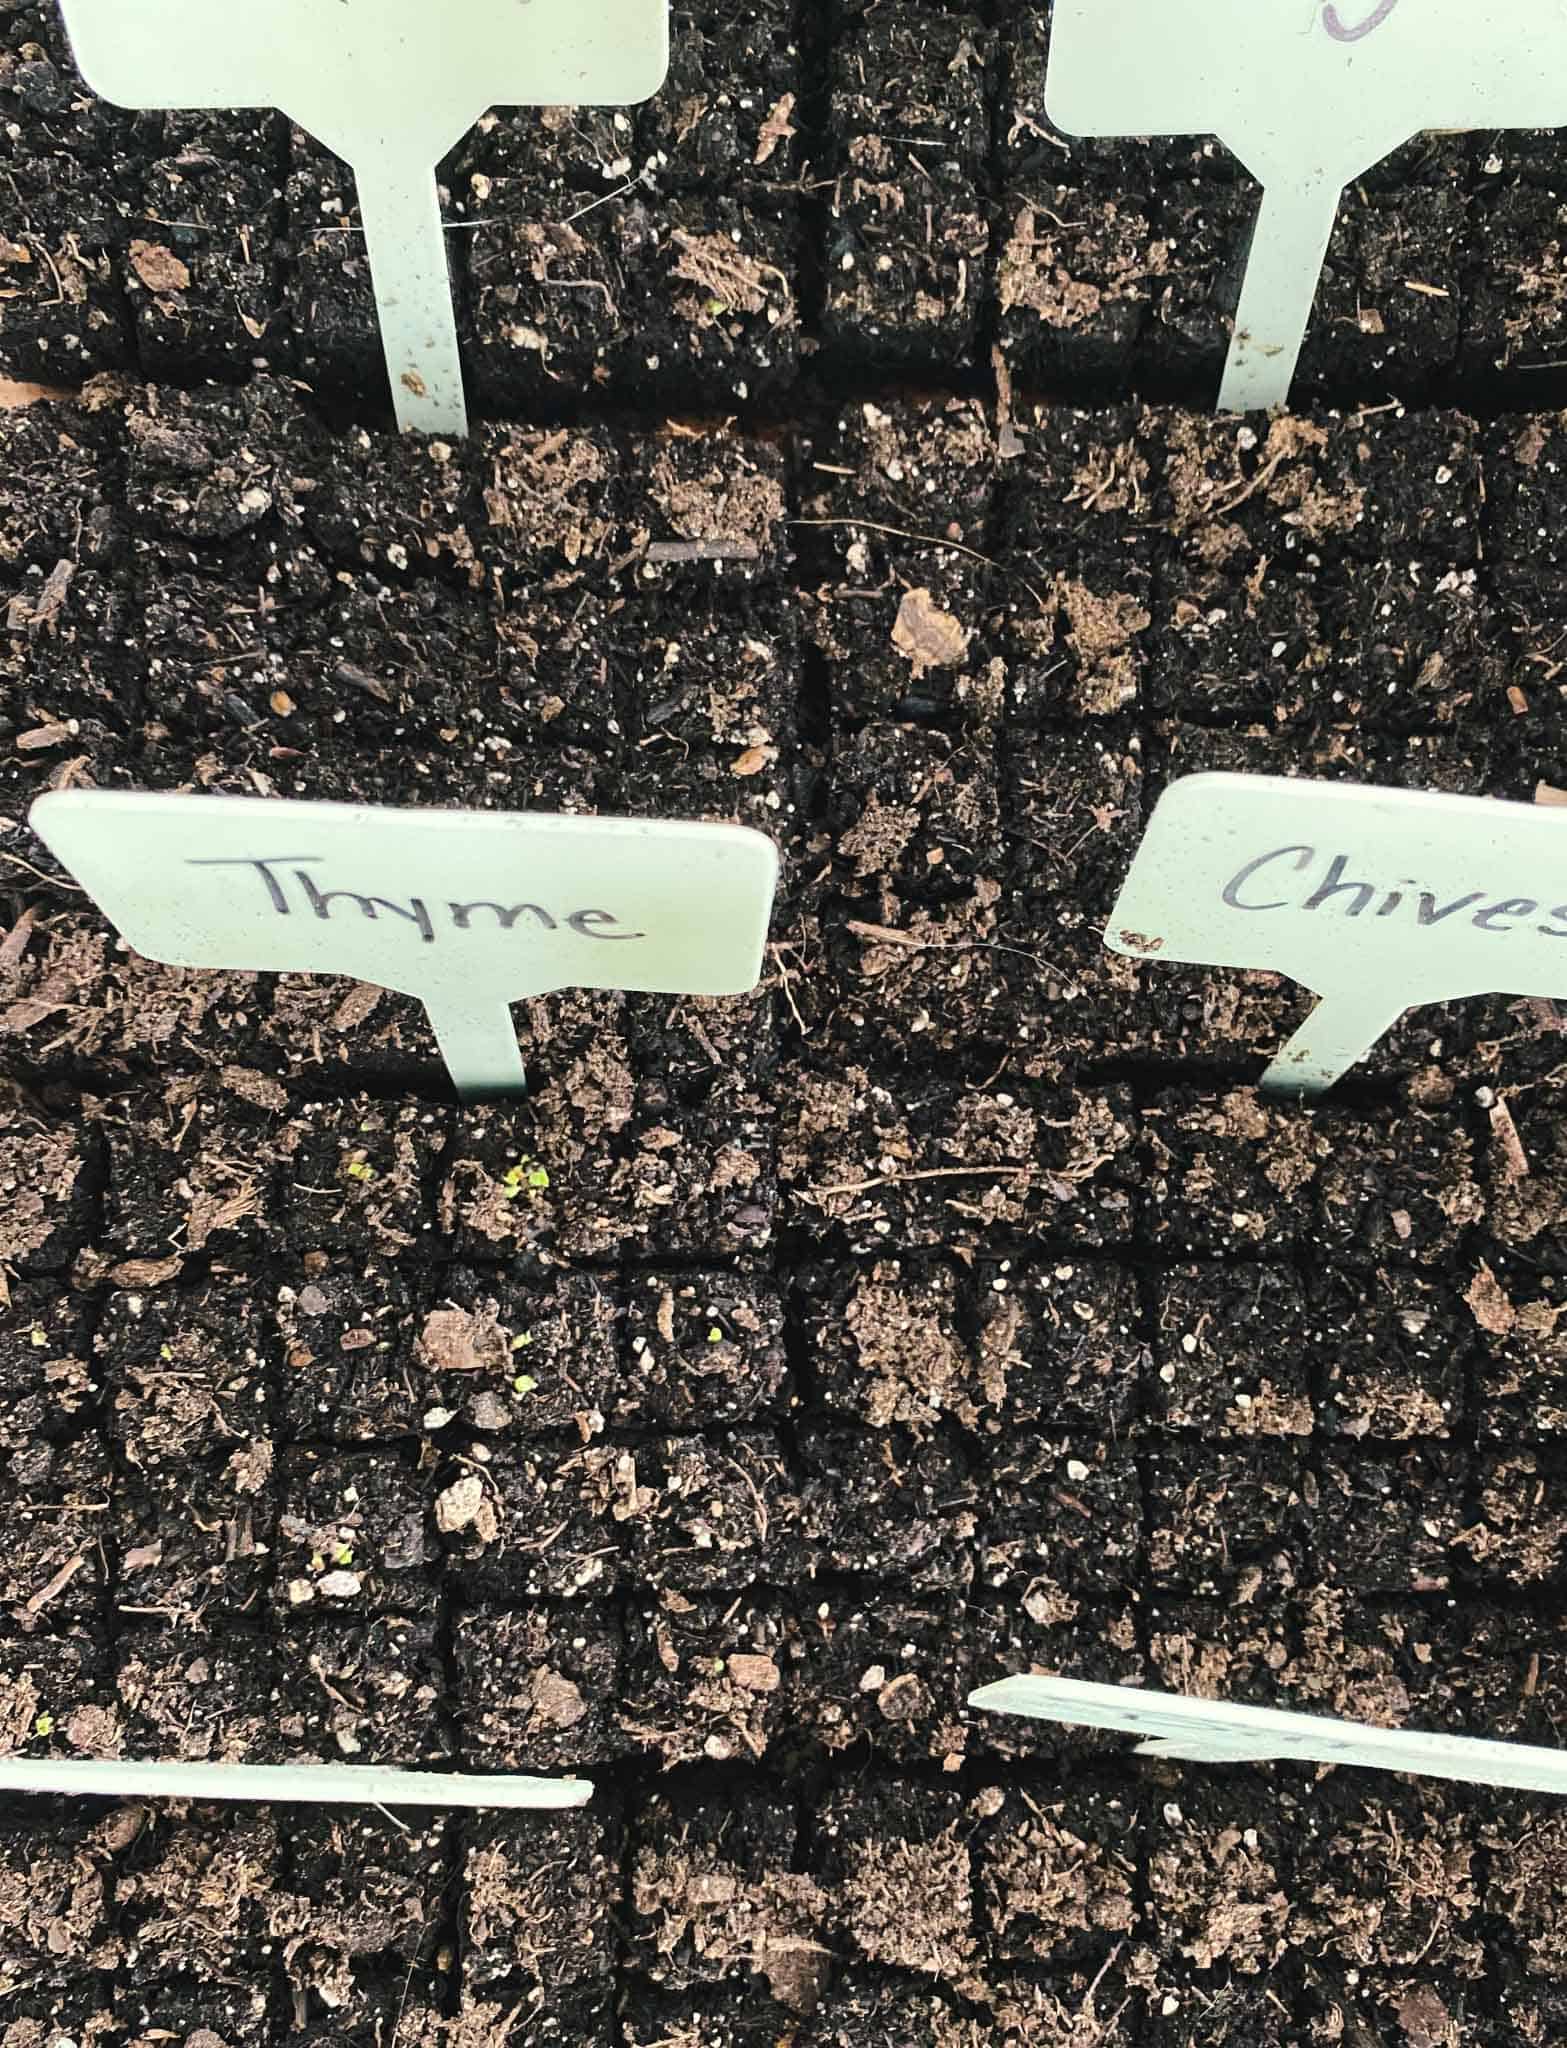 Mini soil blocks sown with herbs.